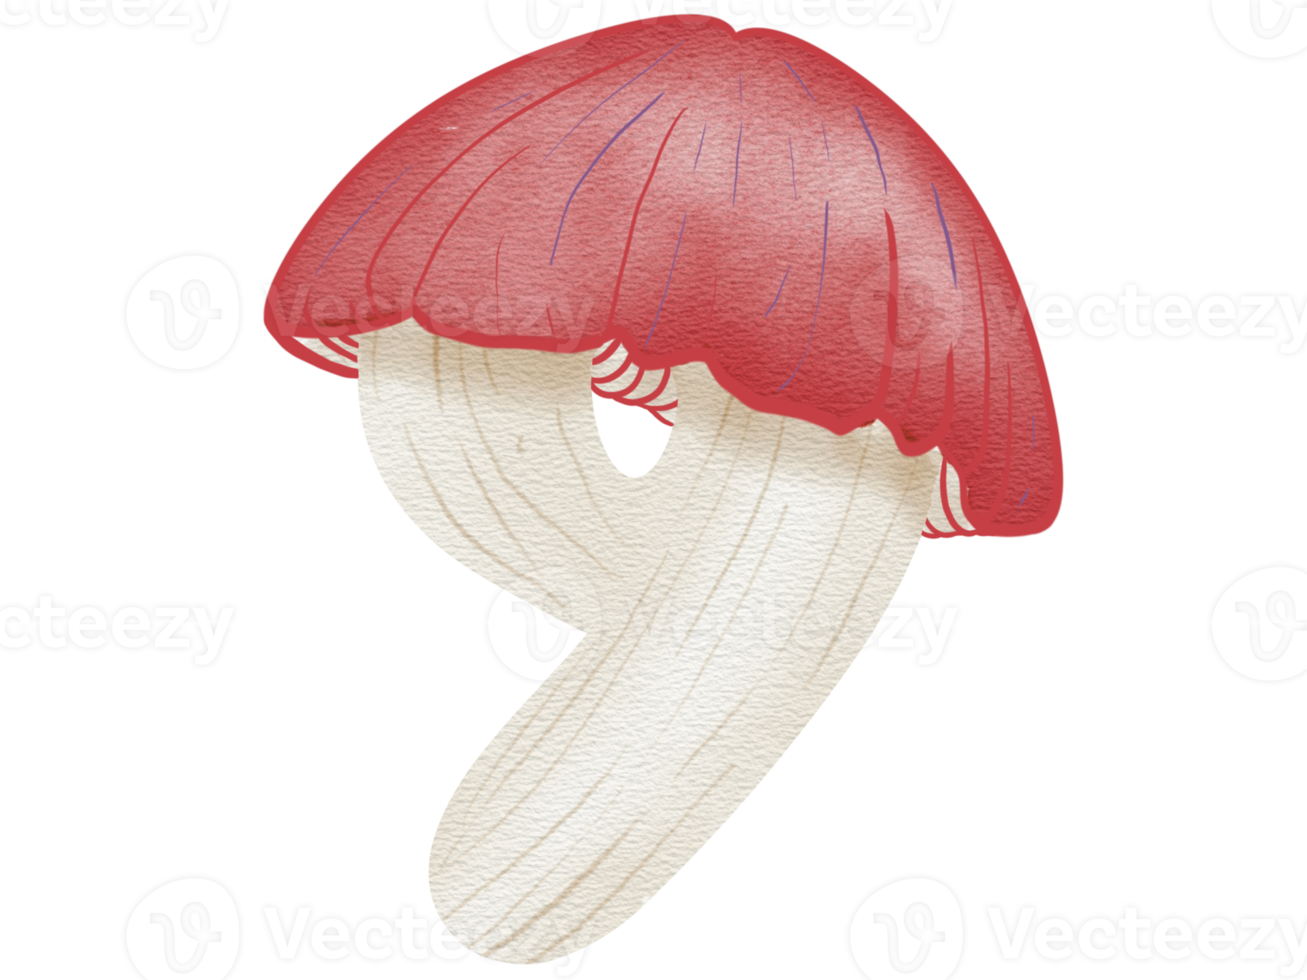 Number Mushroom in watercolor png